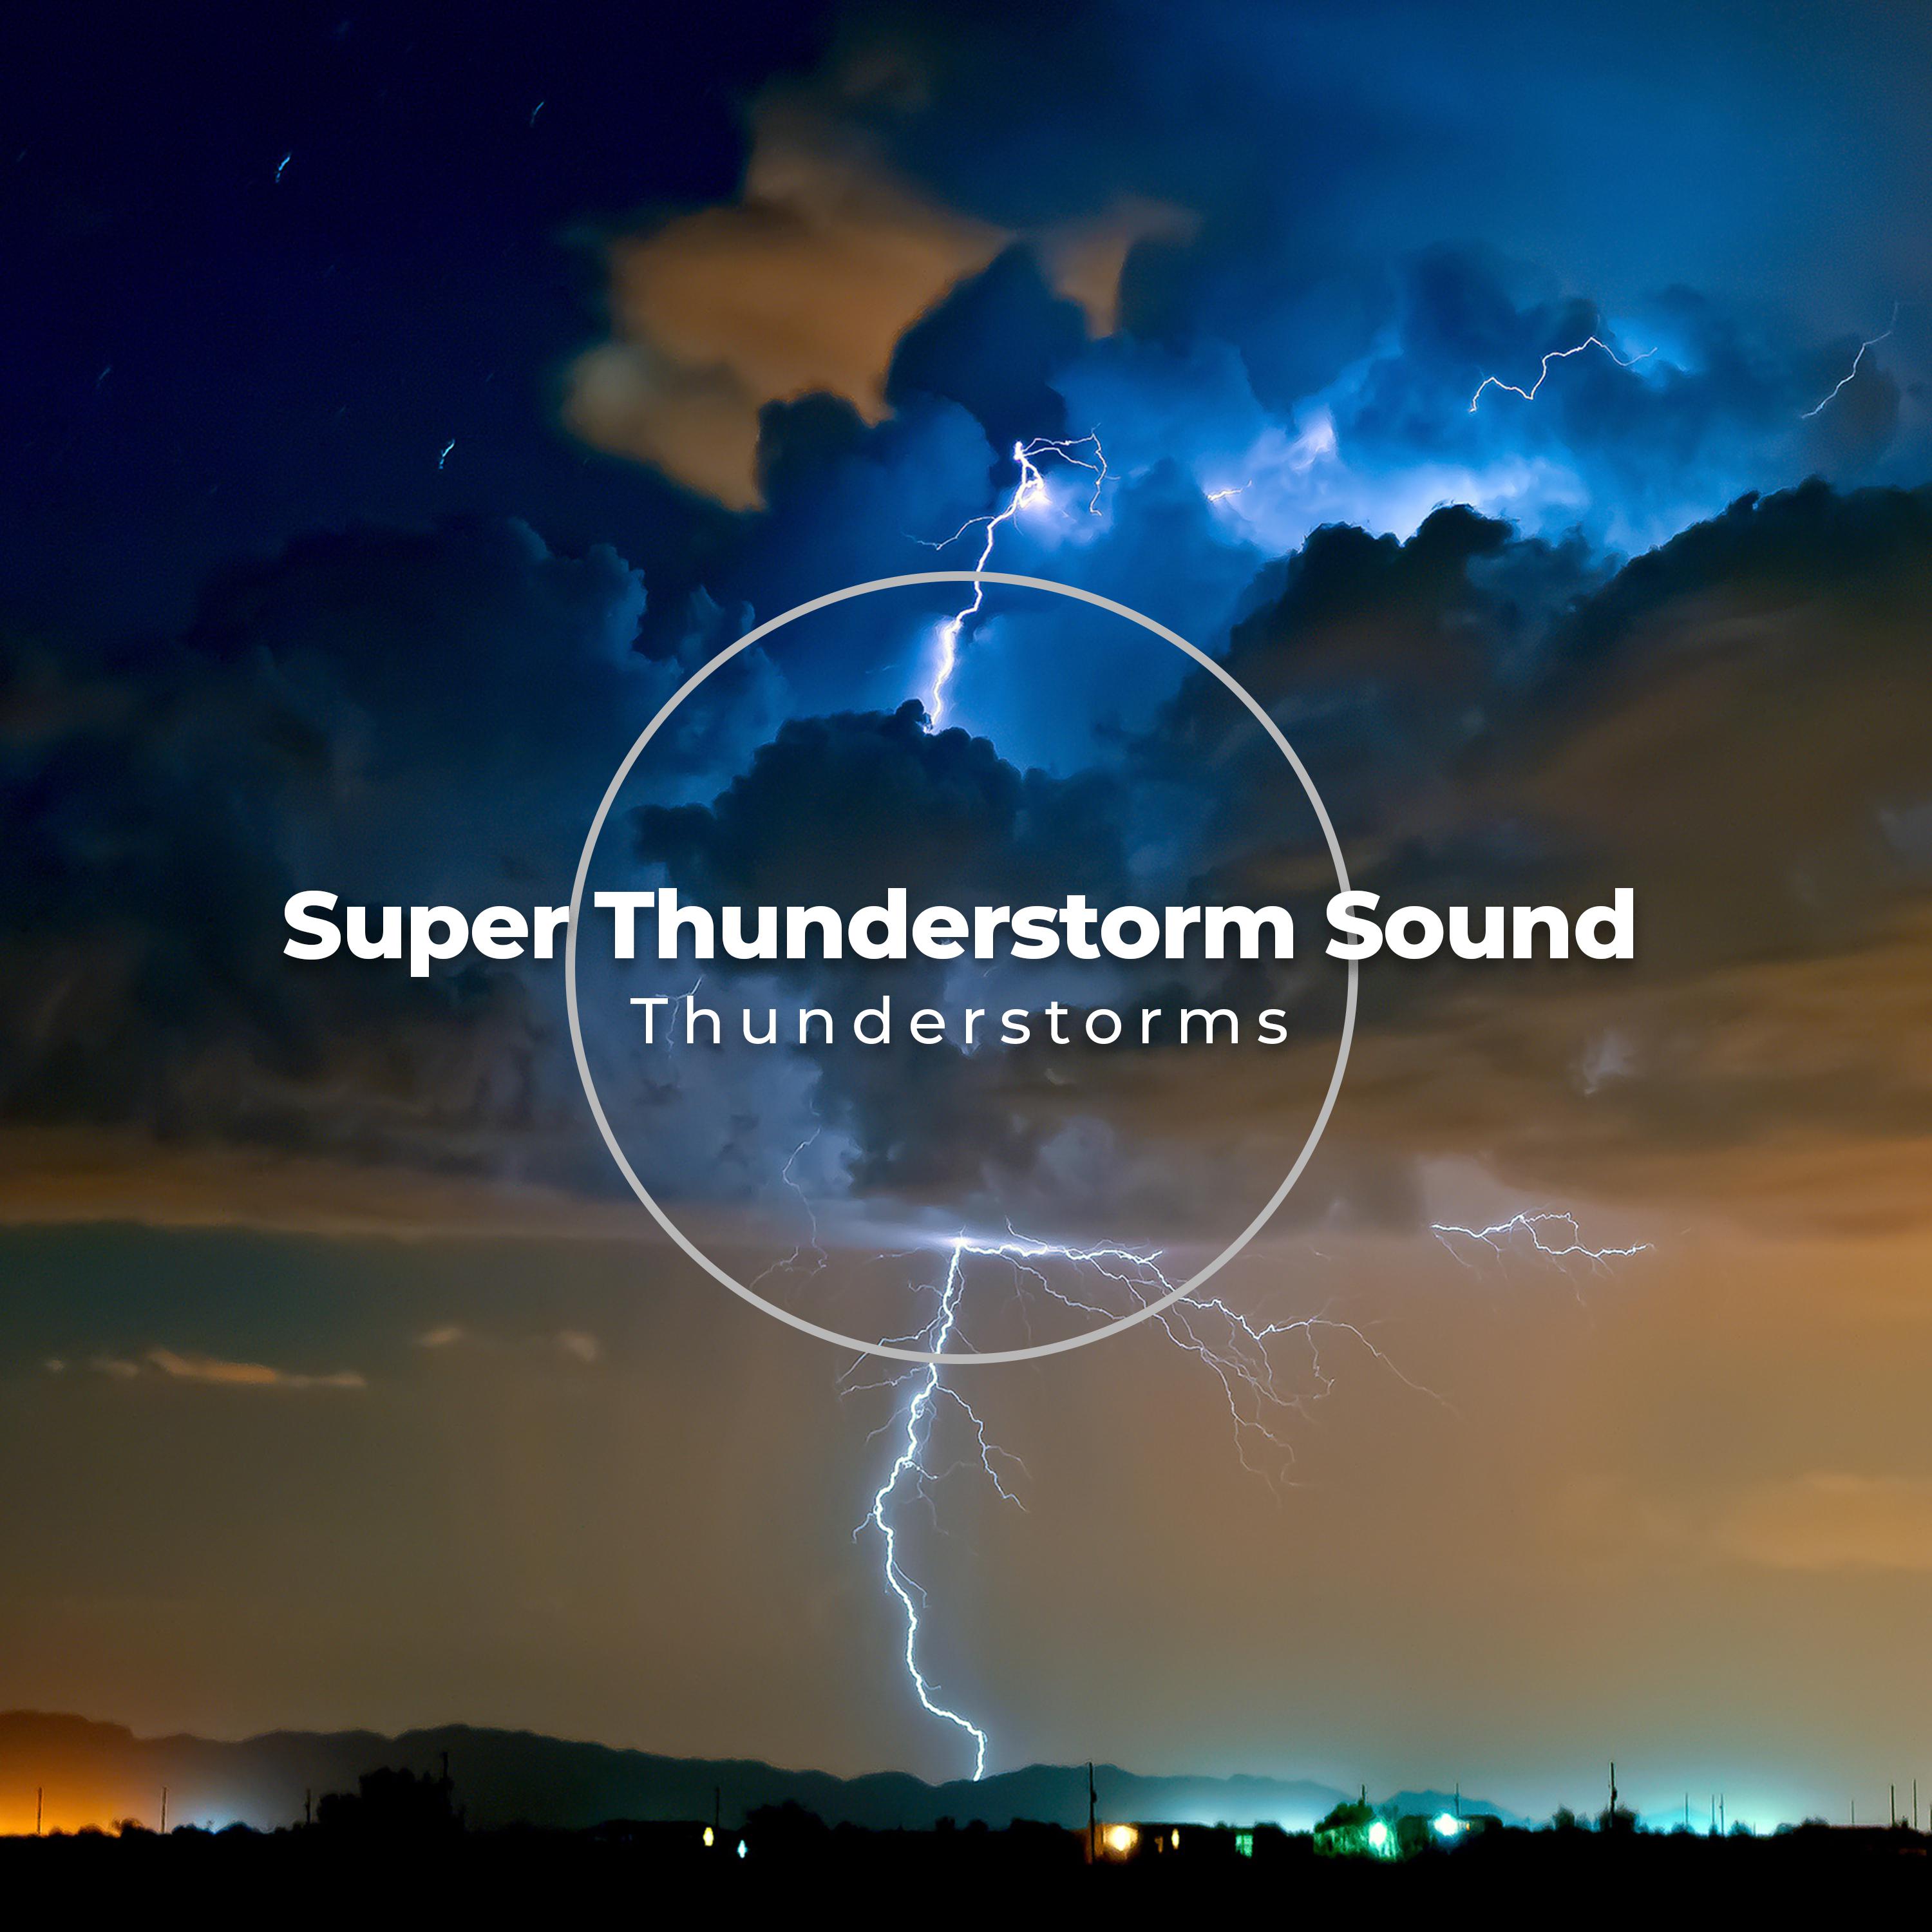 Super Thunderstorm Sound